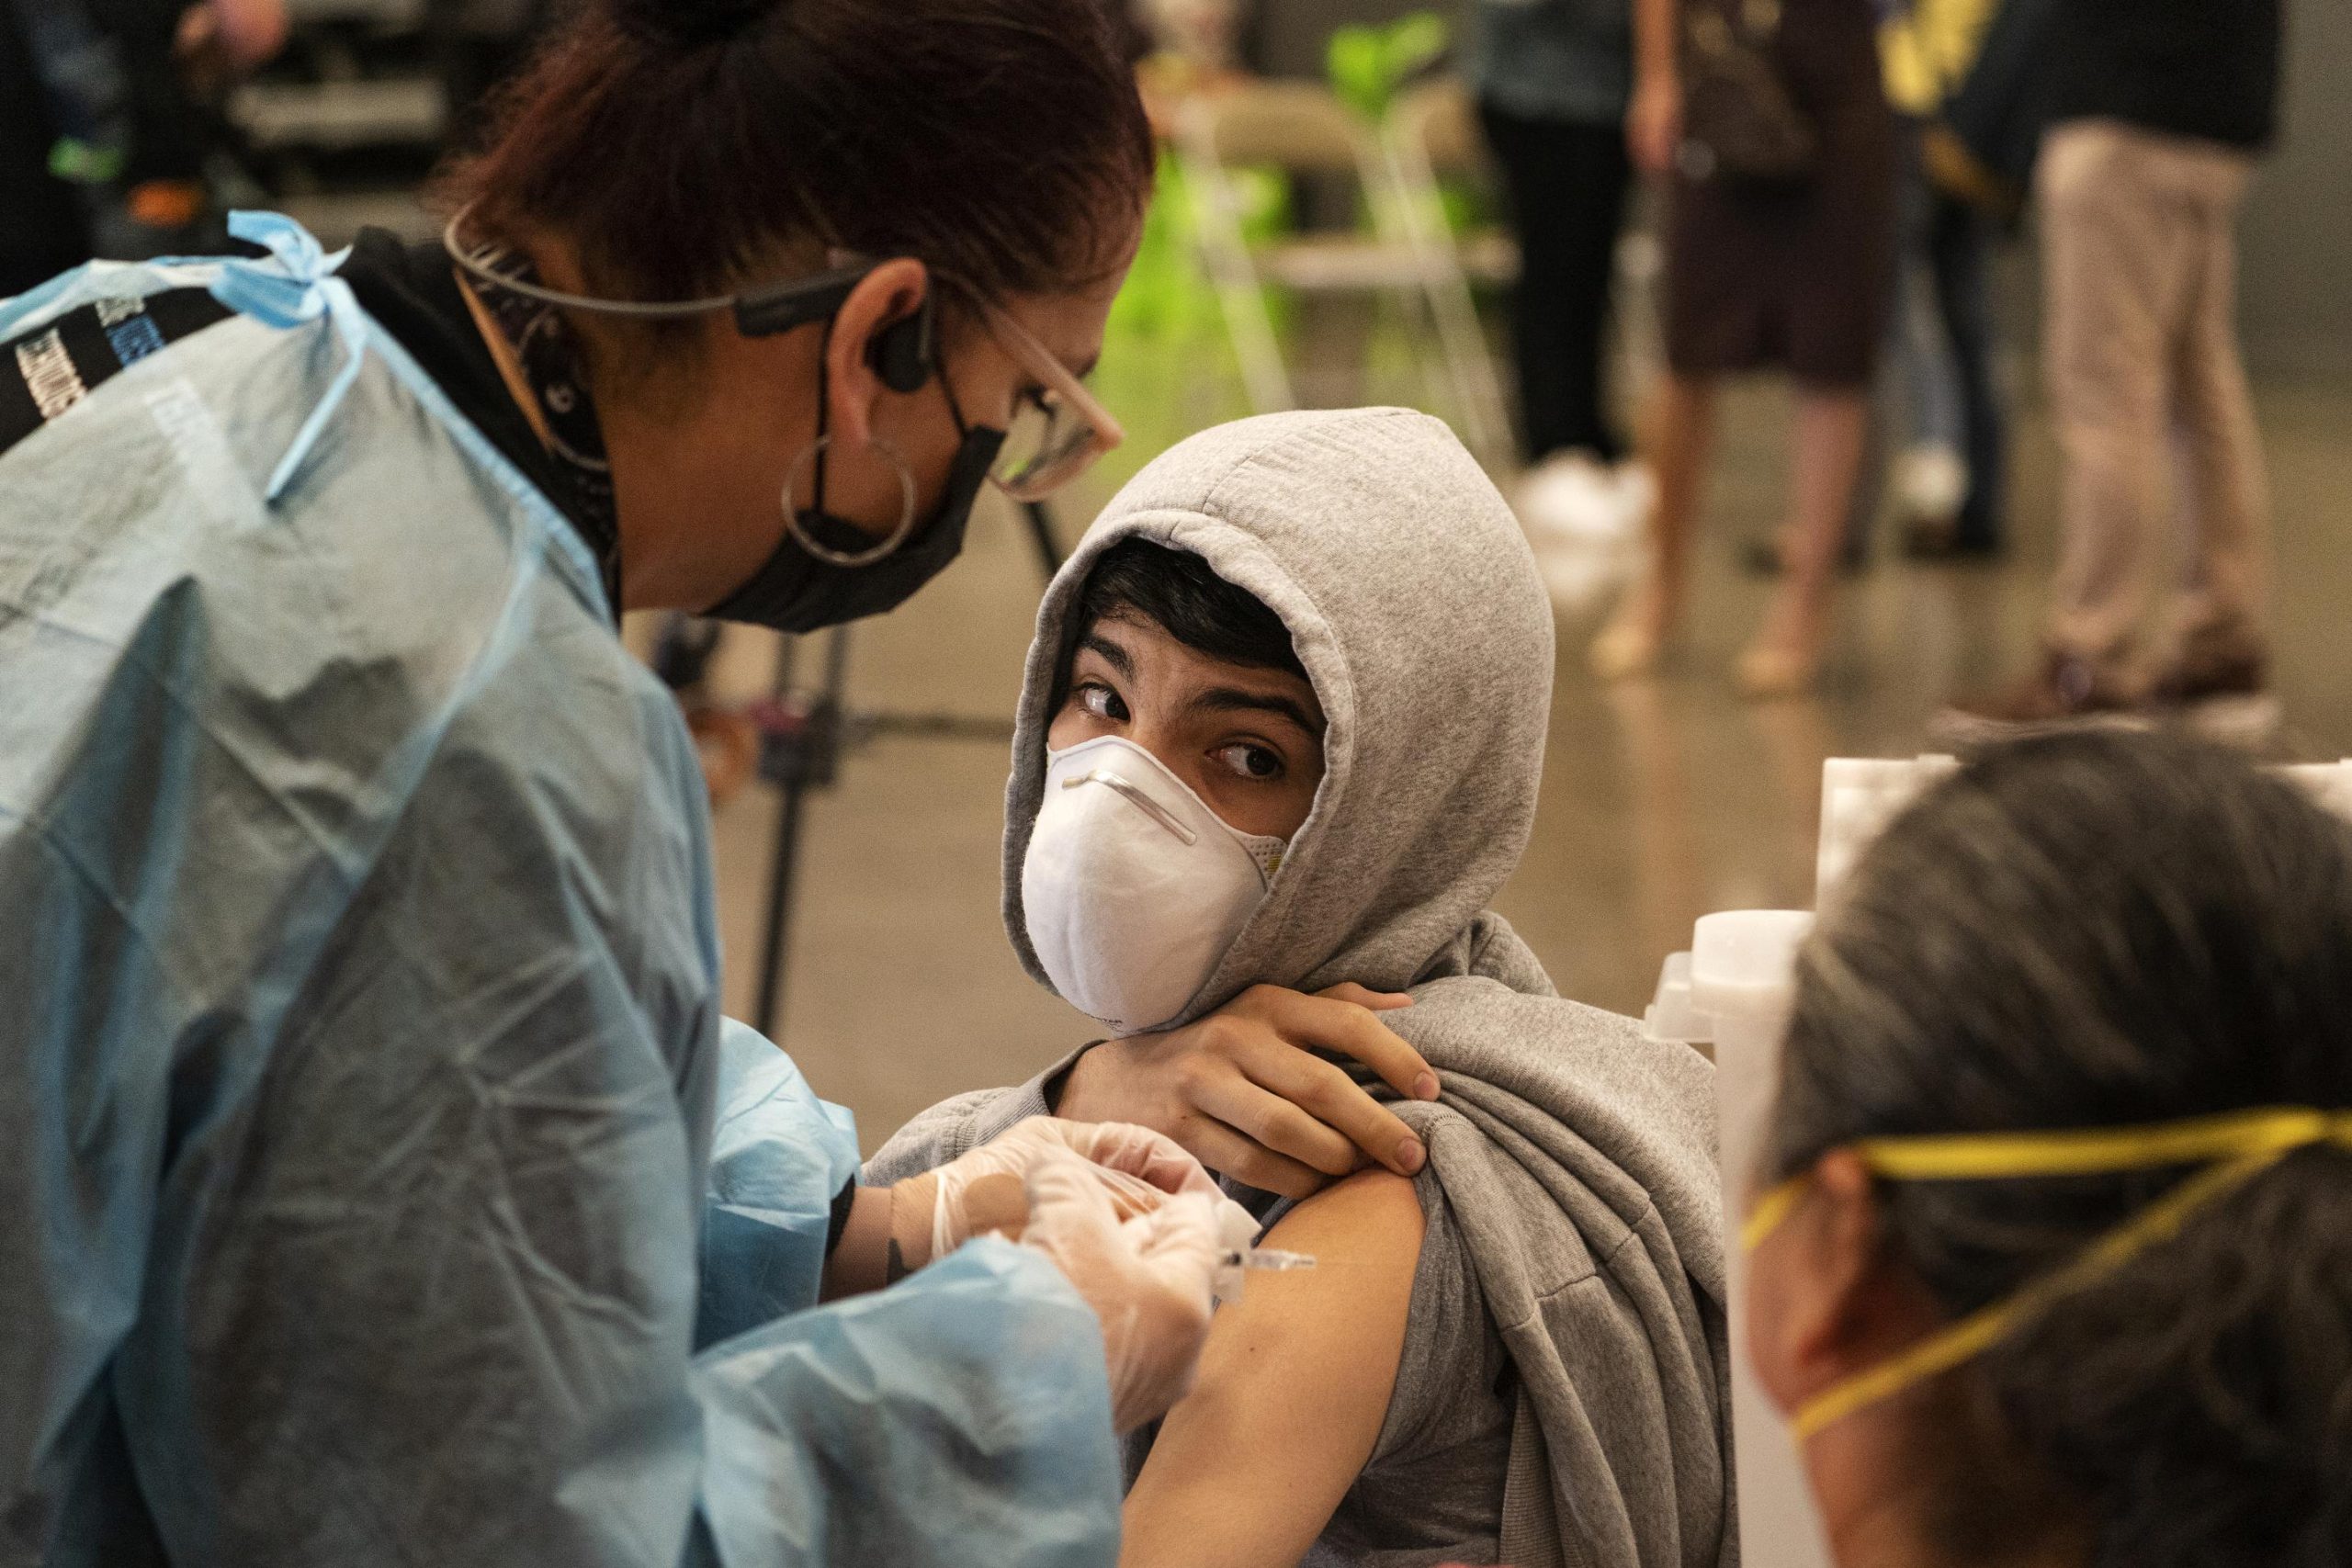 California lawmaker scraps plan for preteen vaccine consent